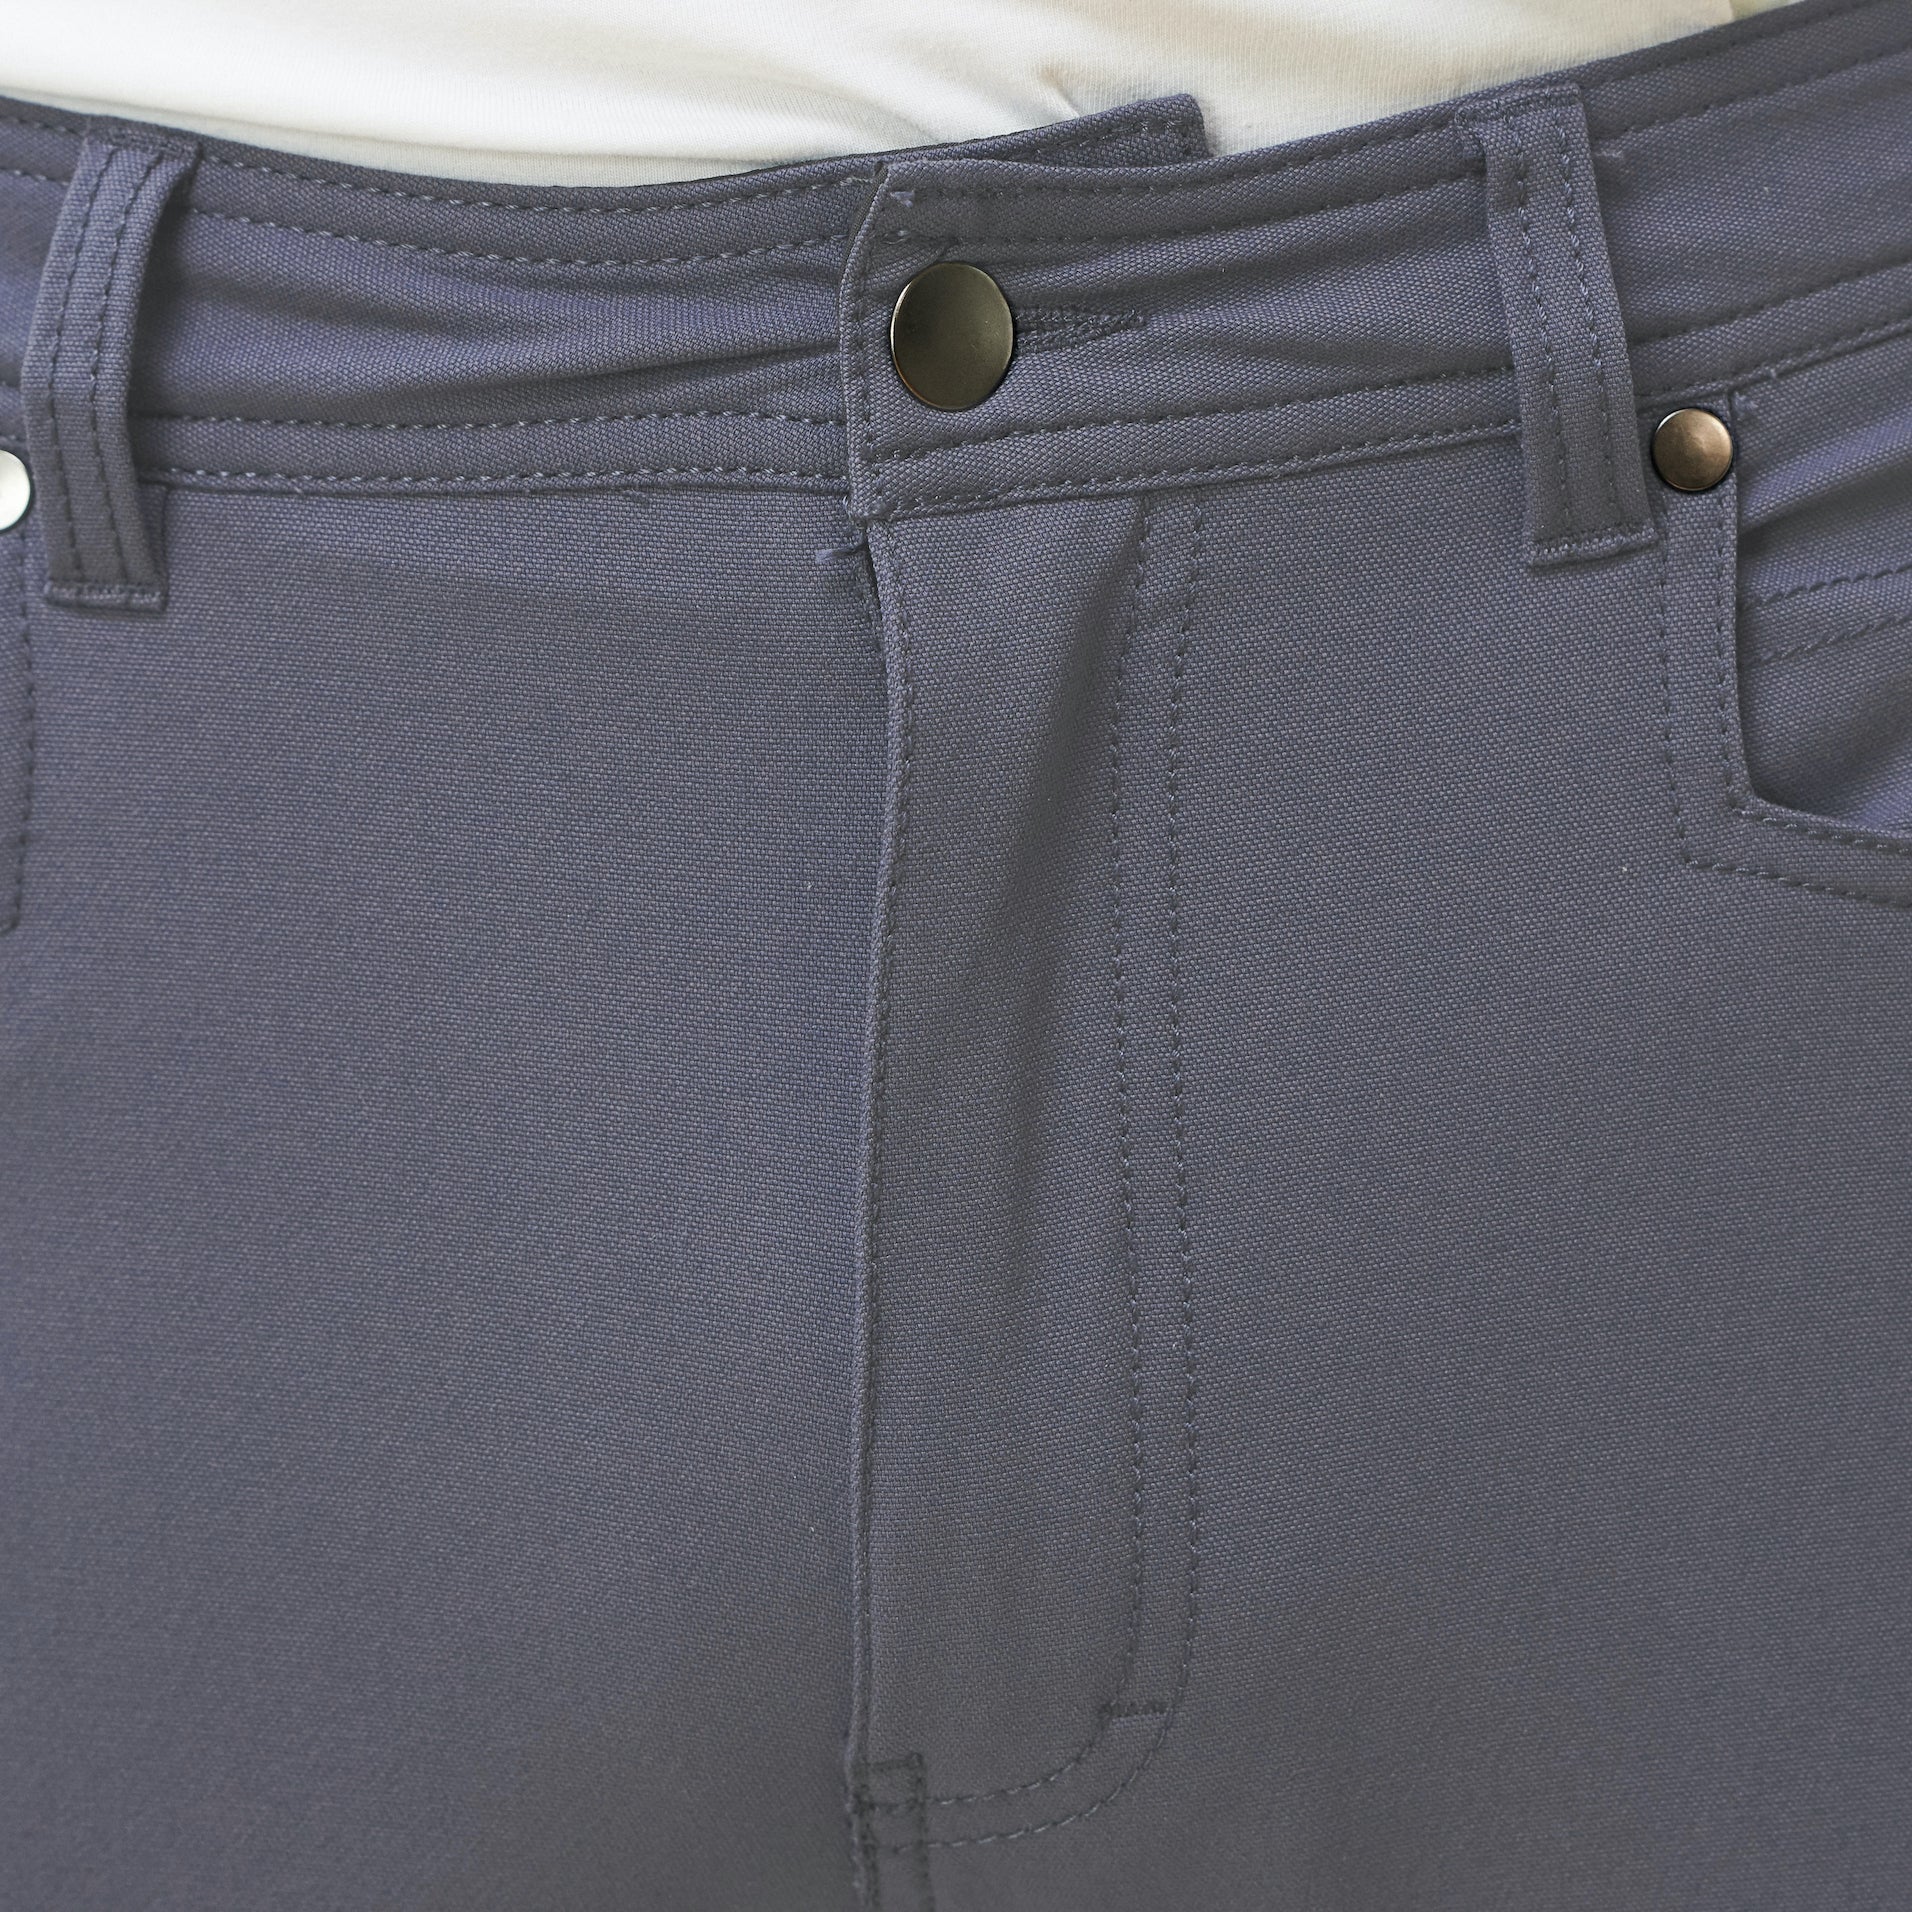 Diversion Pant Slim - Blue grey
